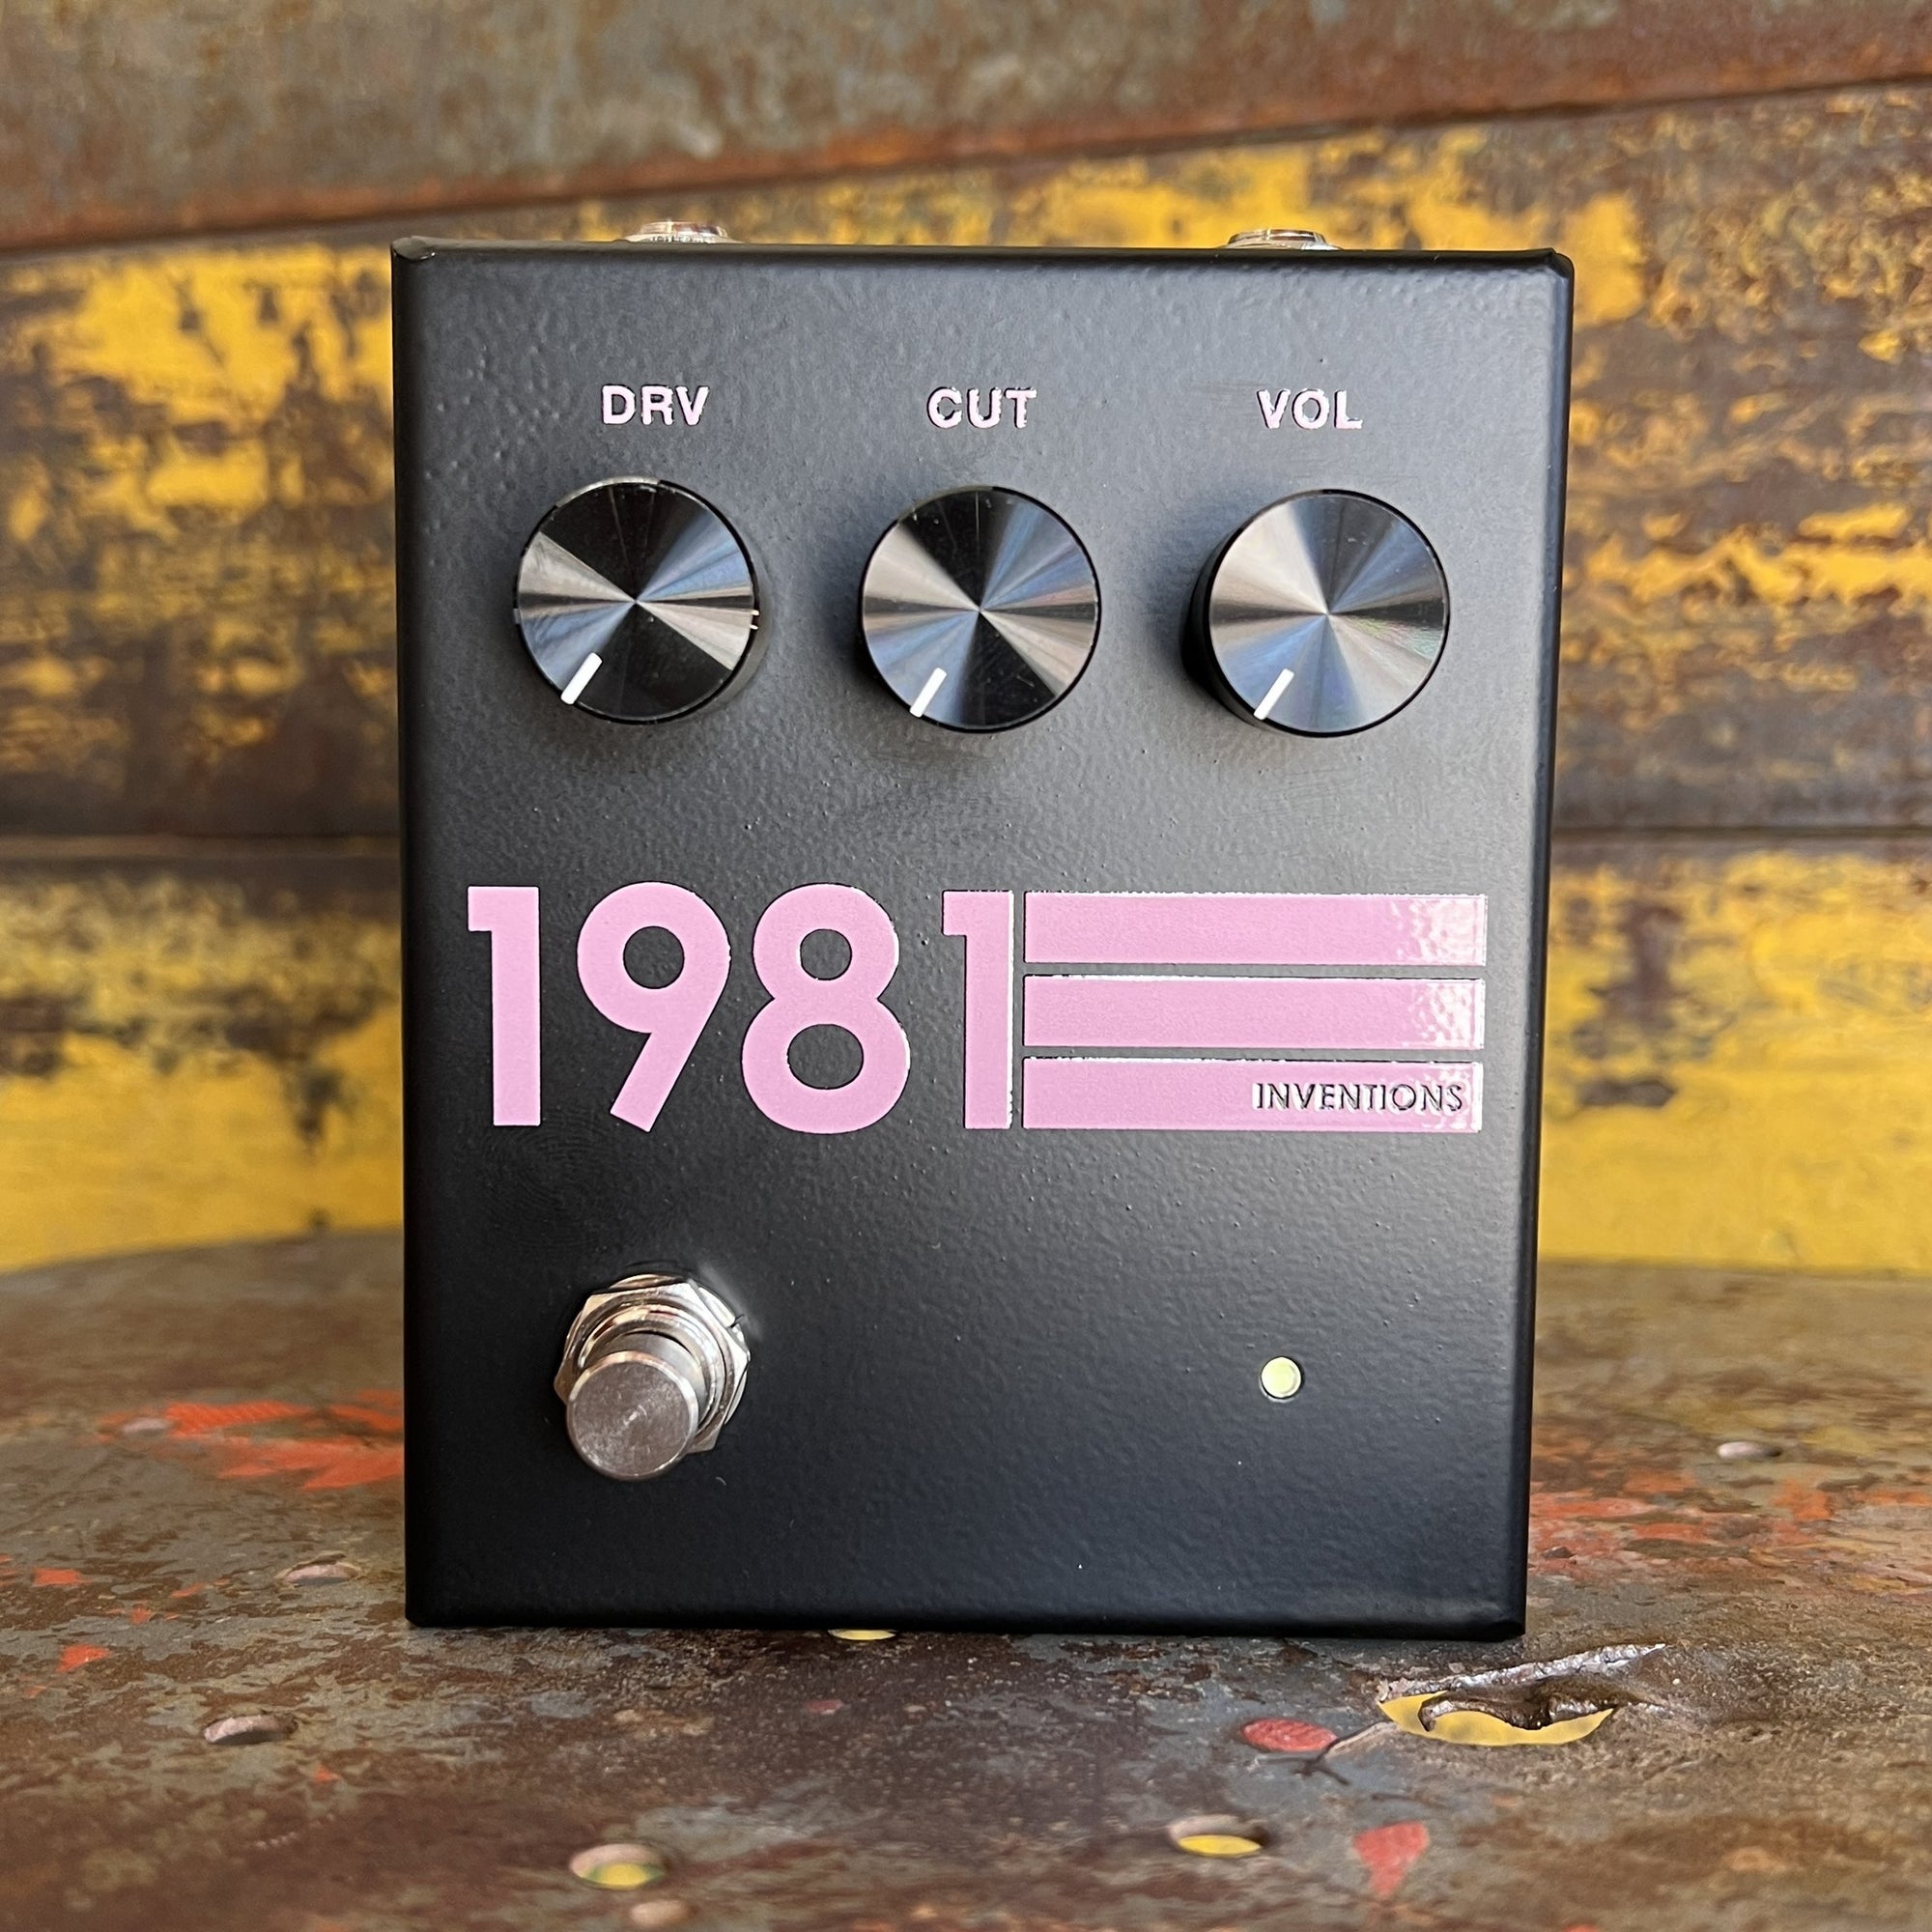 1981 Inventions DRV Black / Pink